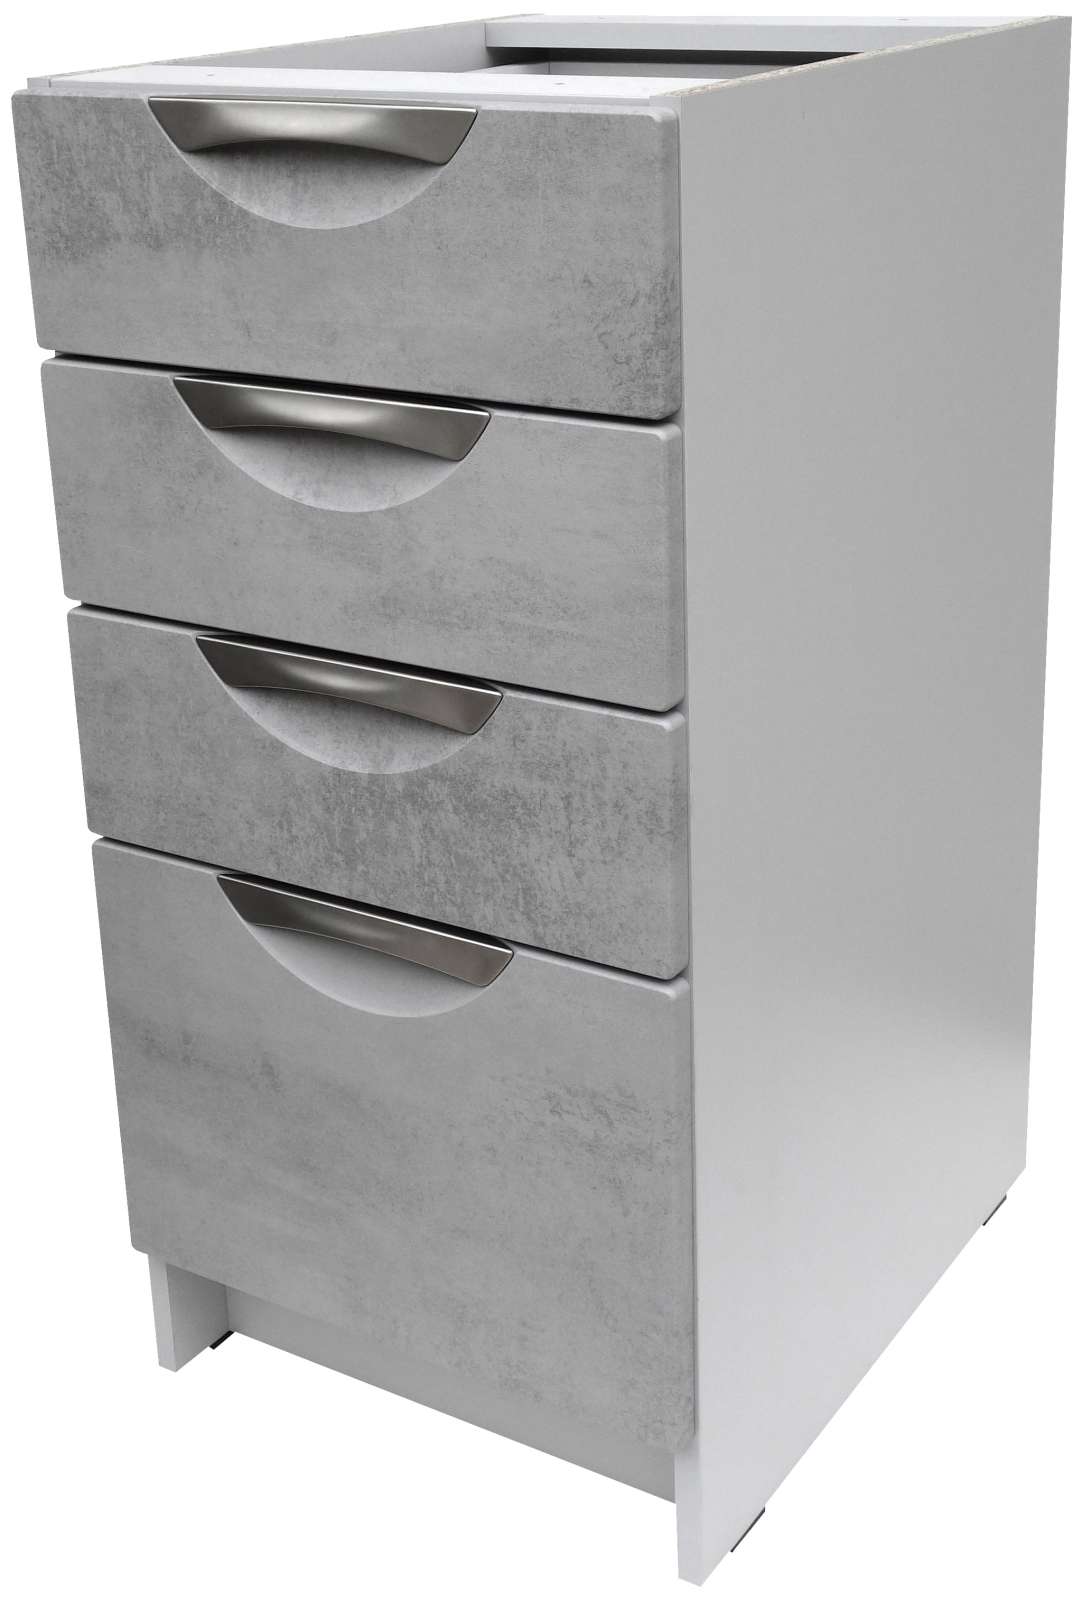 Kuchyňská skříňka spodní šuplíky barva beton korpus šedý 40 cm